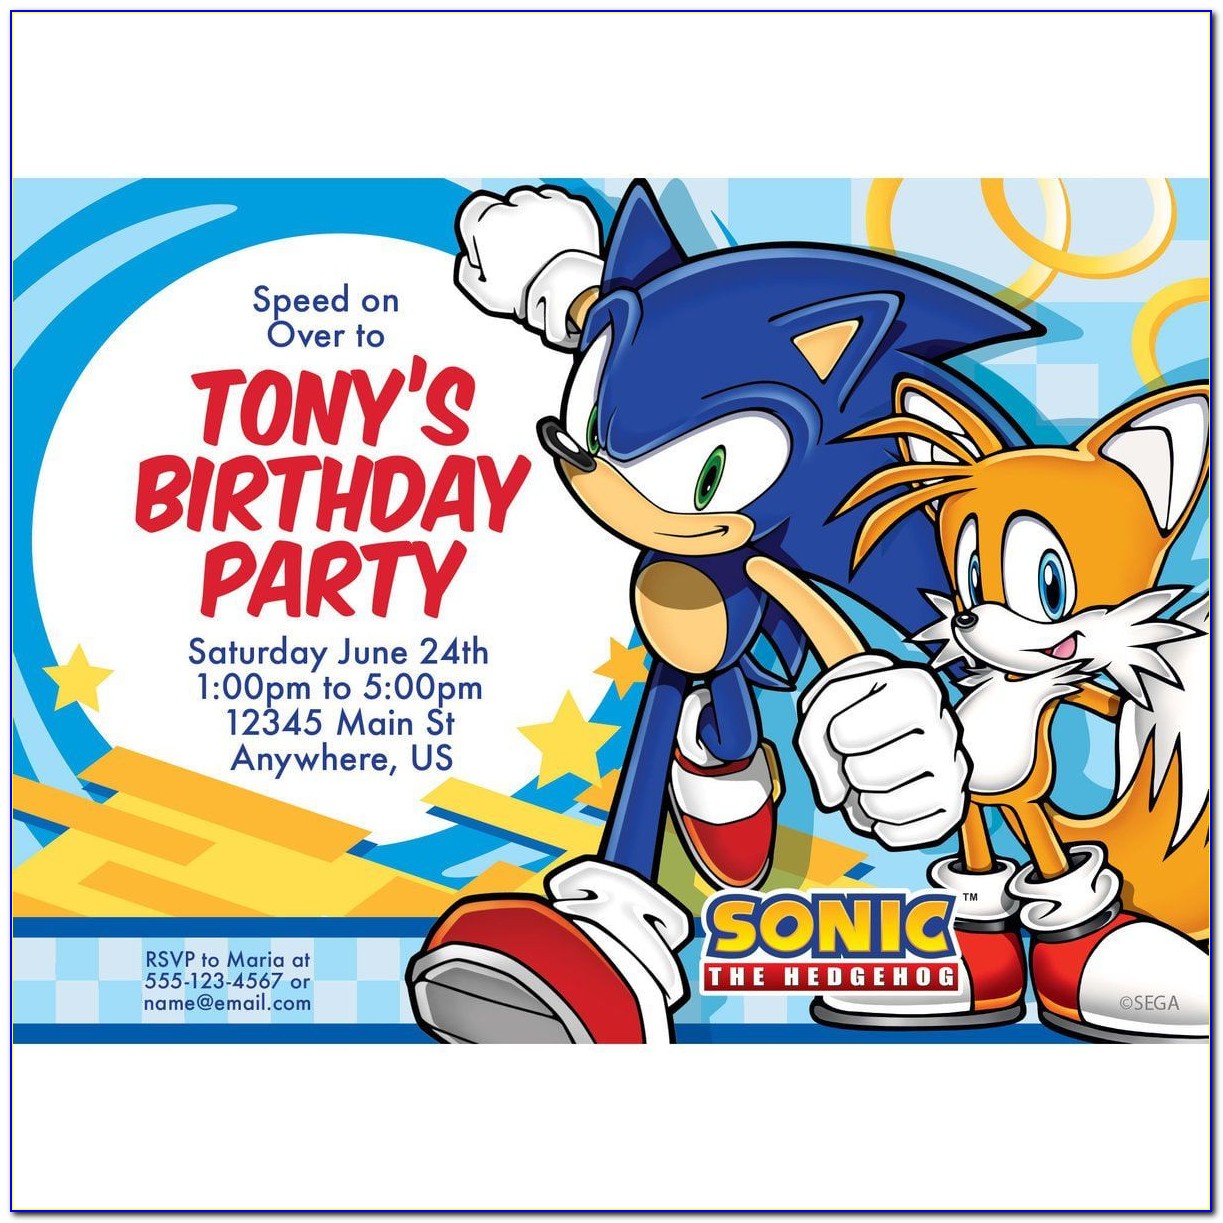 Sonic Hedgehog Birthday Invitations